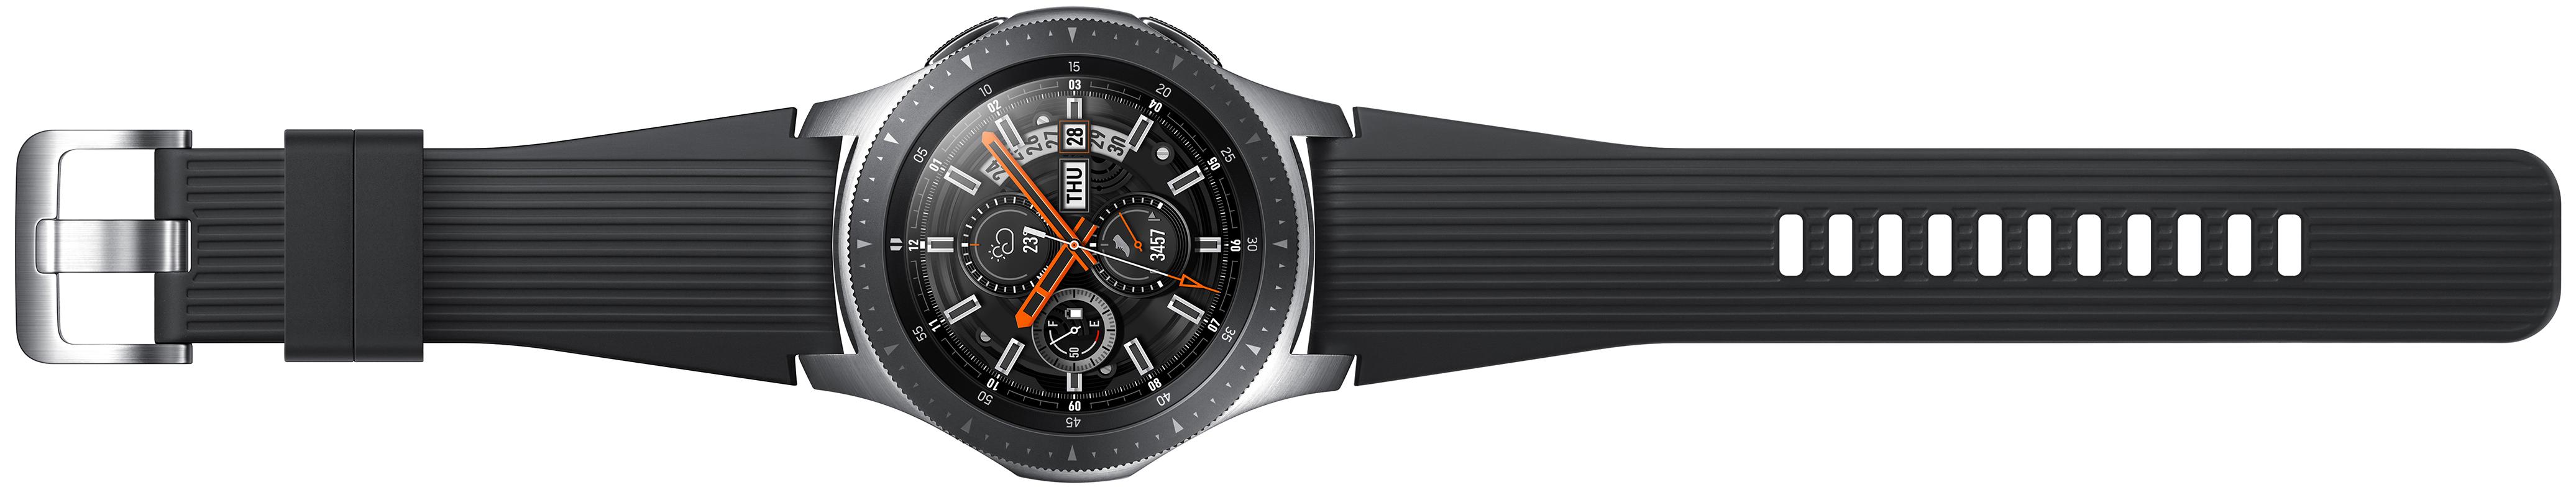 Часы Samsung Galaxy Watch 46 мм silver (SM-R800NZSASER) 0200-1758 Galaxy Watch 46 мм silver (SM-R800NZSASER) - фото 2